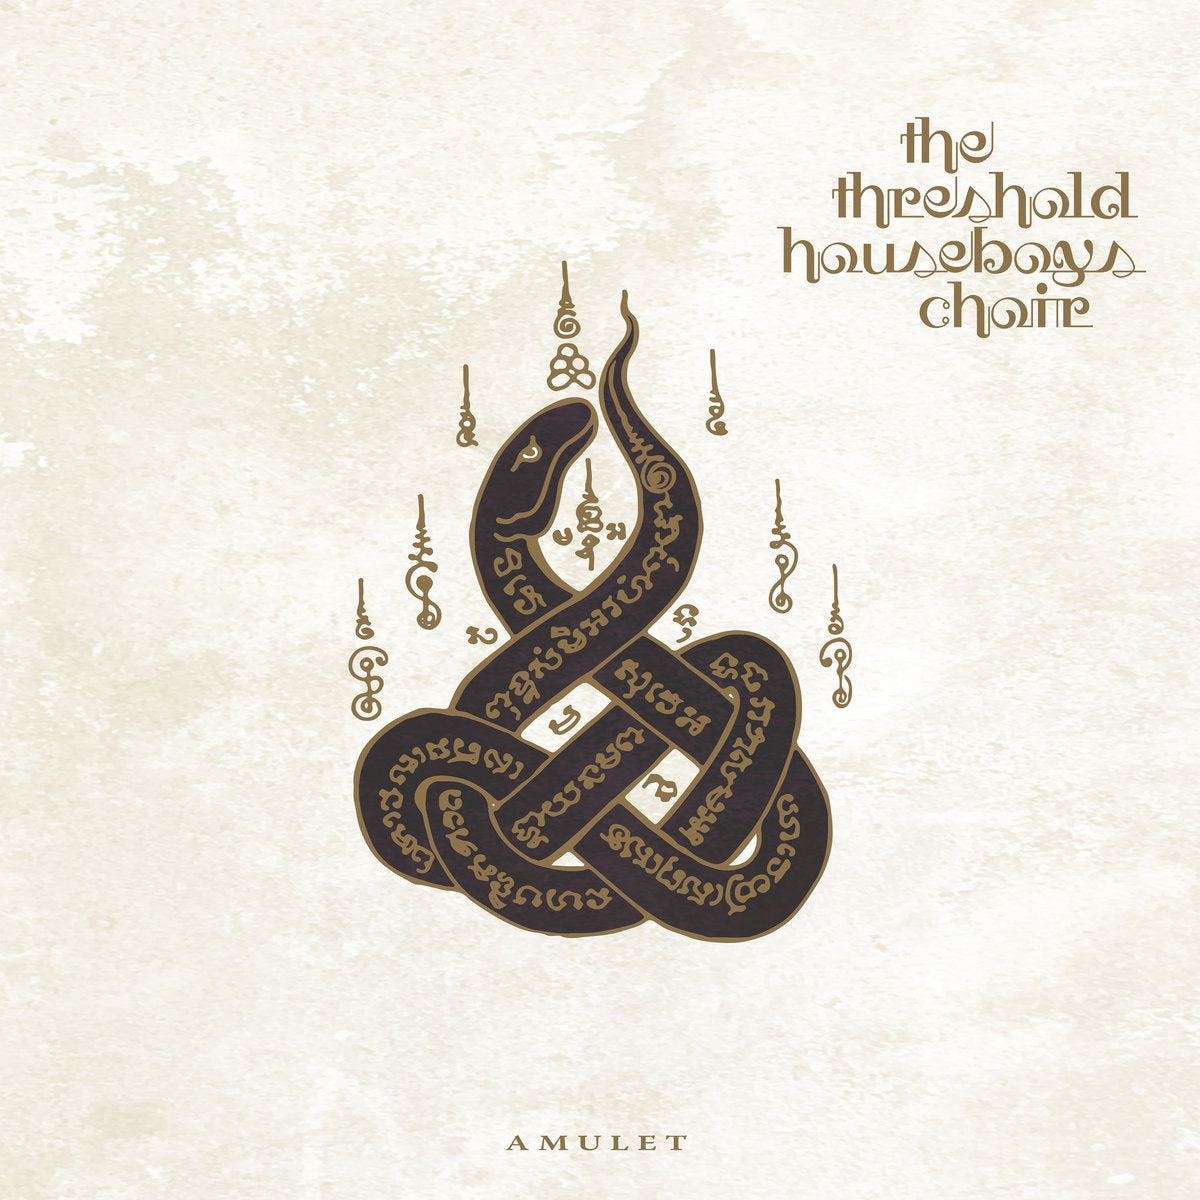 Arcade Sound - The Threshold Houseboys Choir: Amulet - 3LP Black Vinyl / 2CD front cover